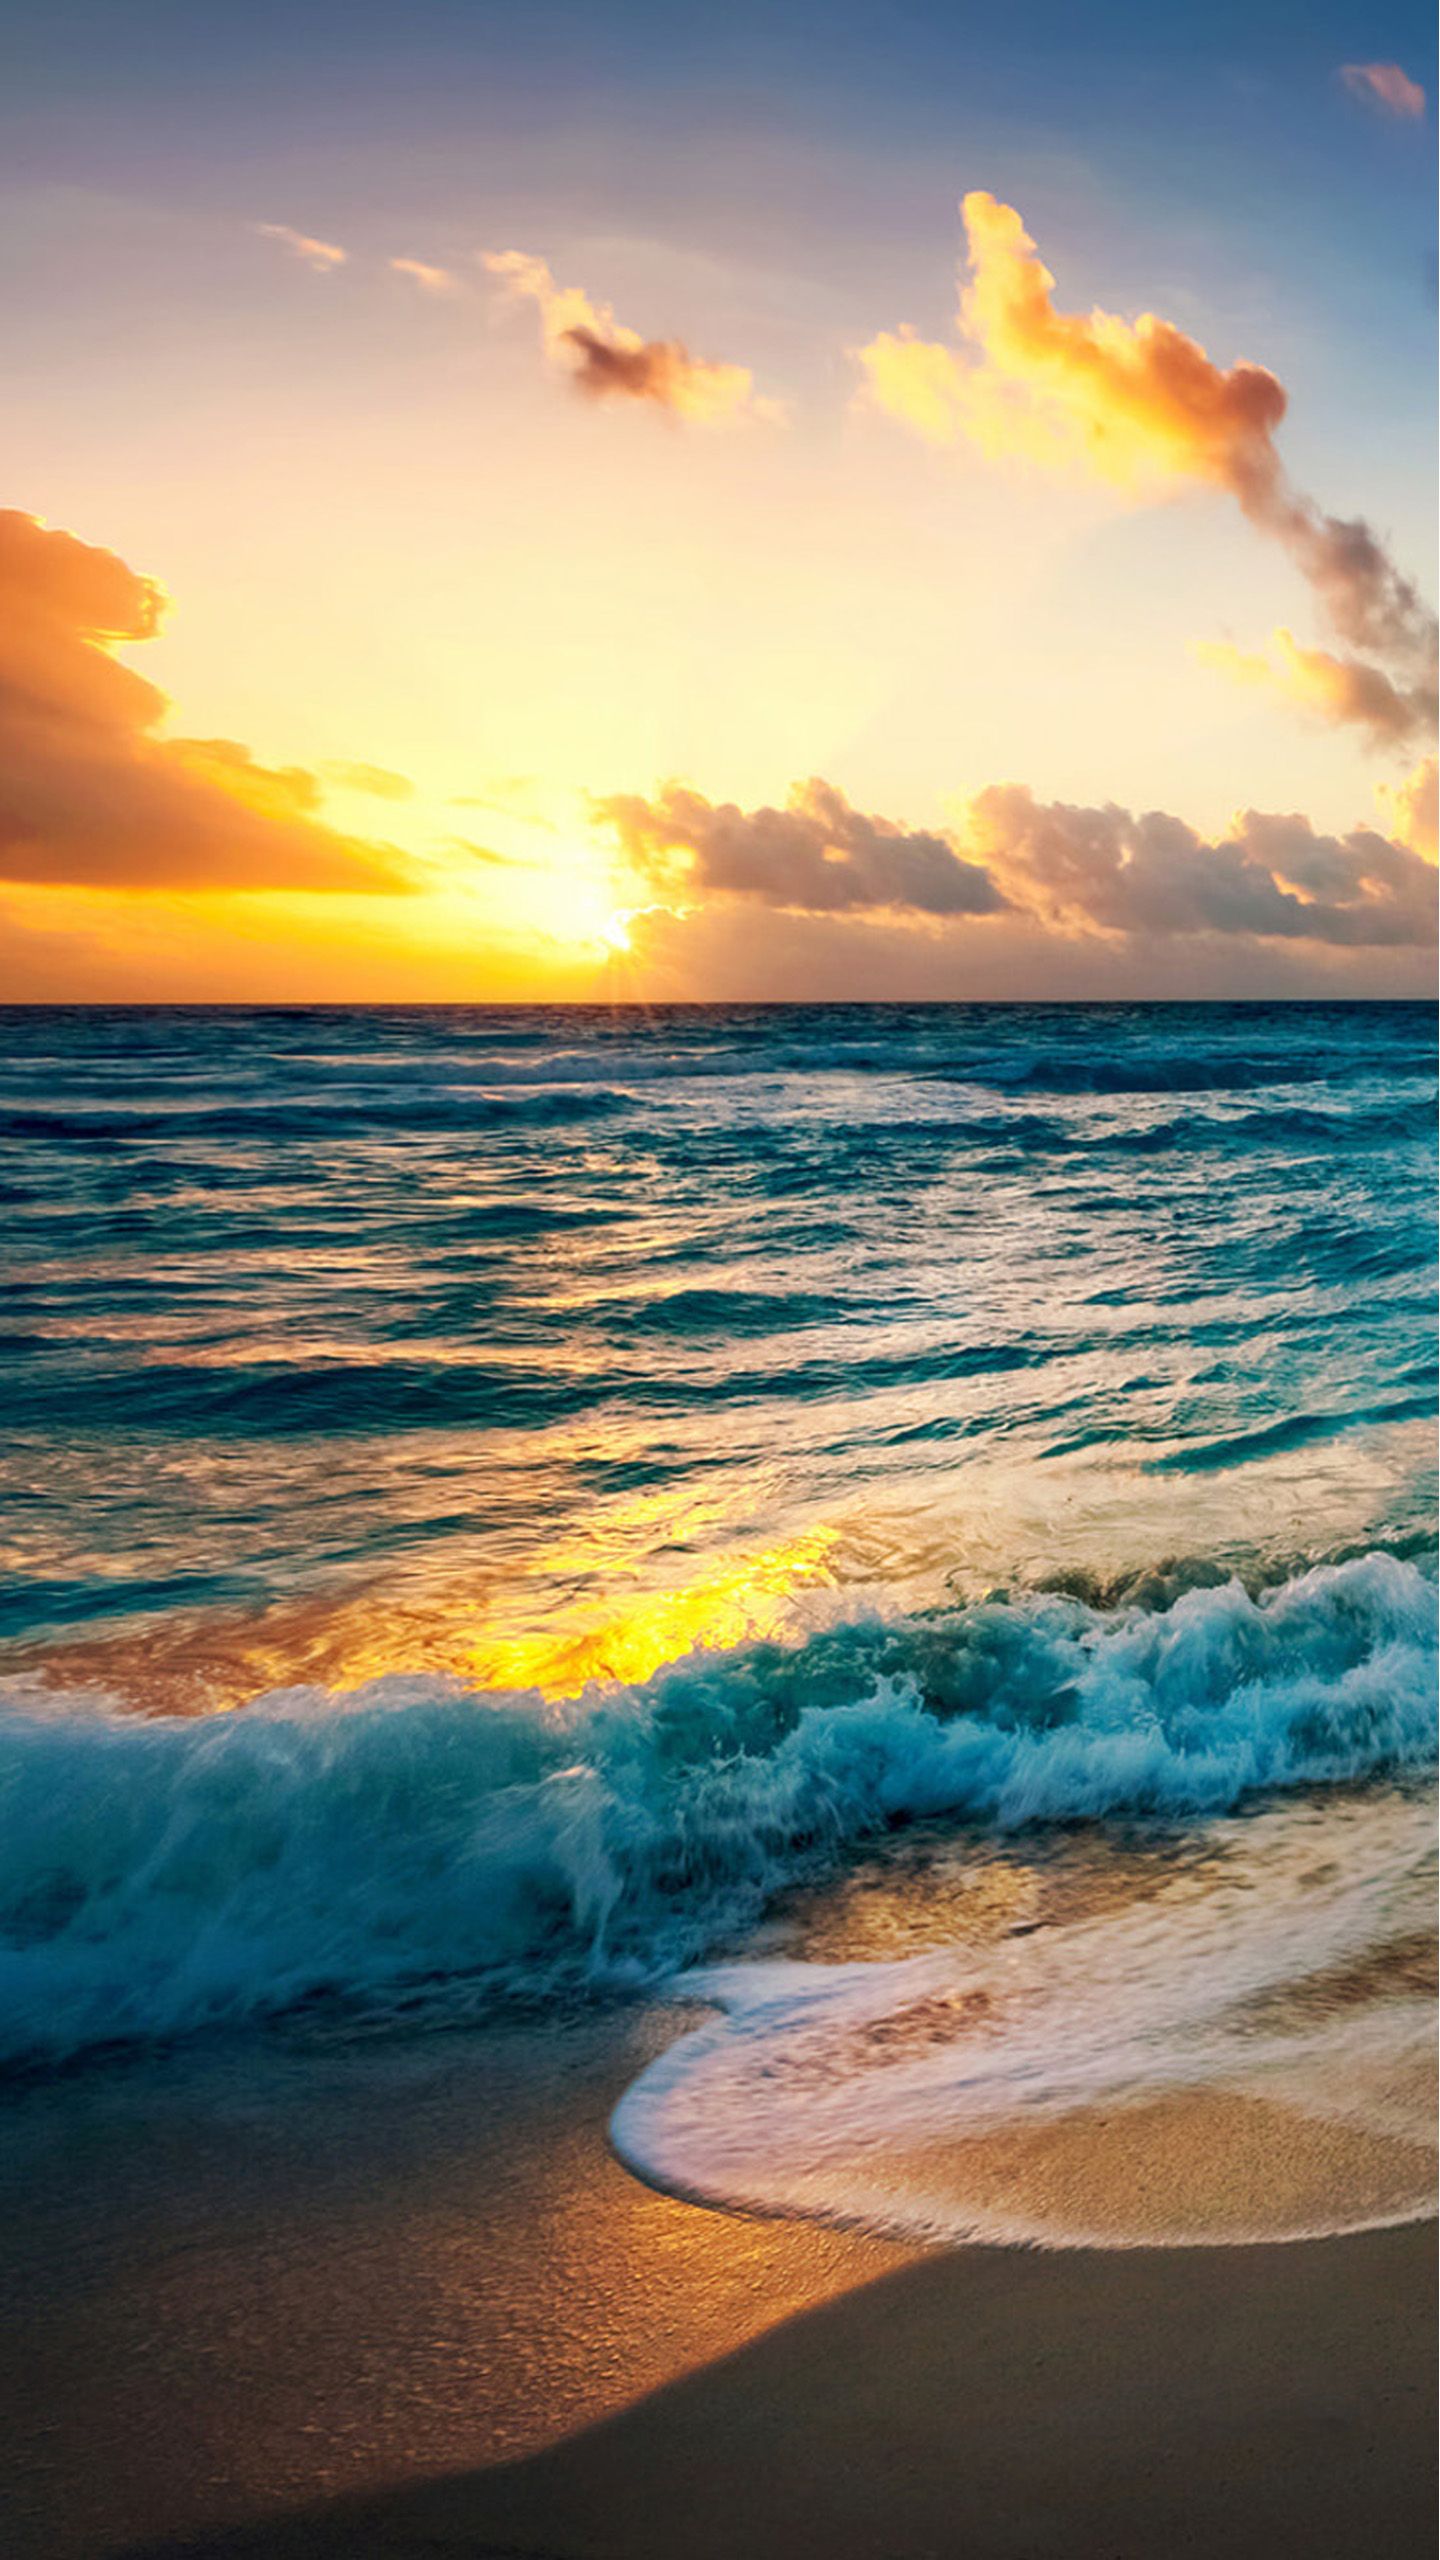 HD Lock Screen The Beach At Sunset Galaxy S7 Wallpaper